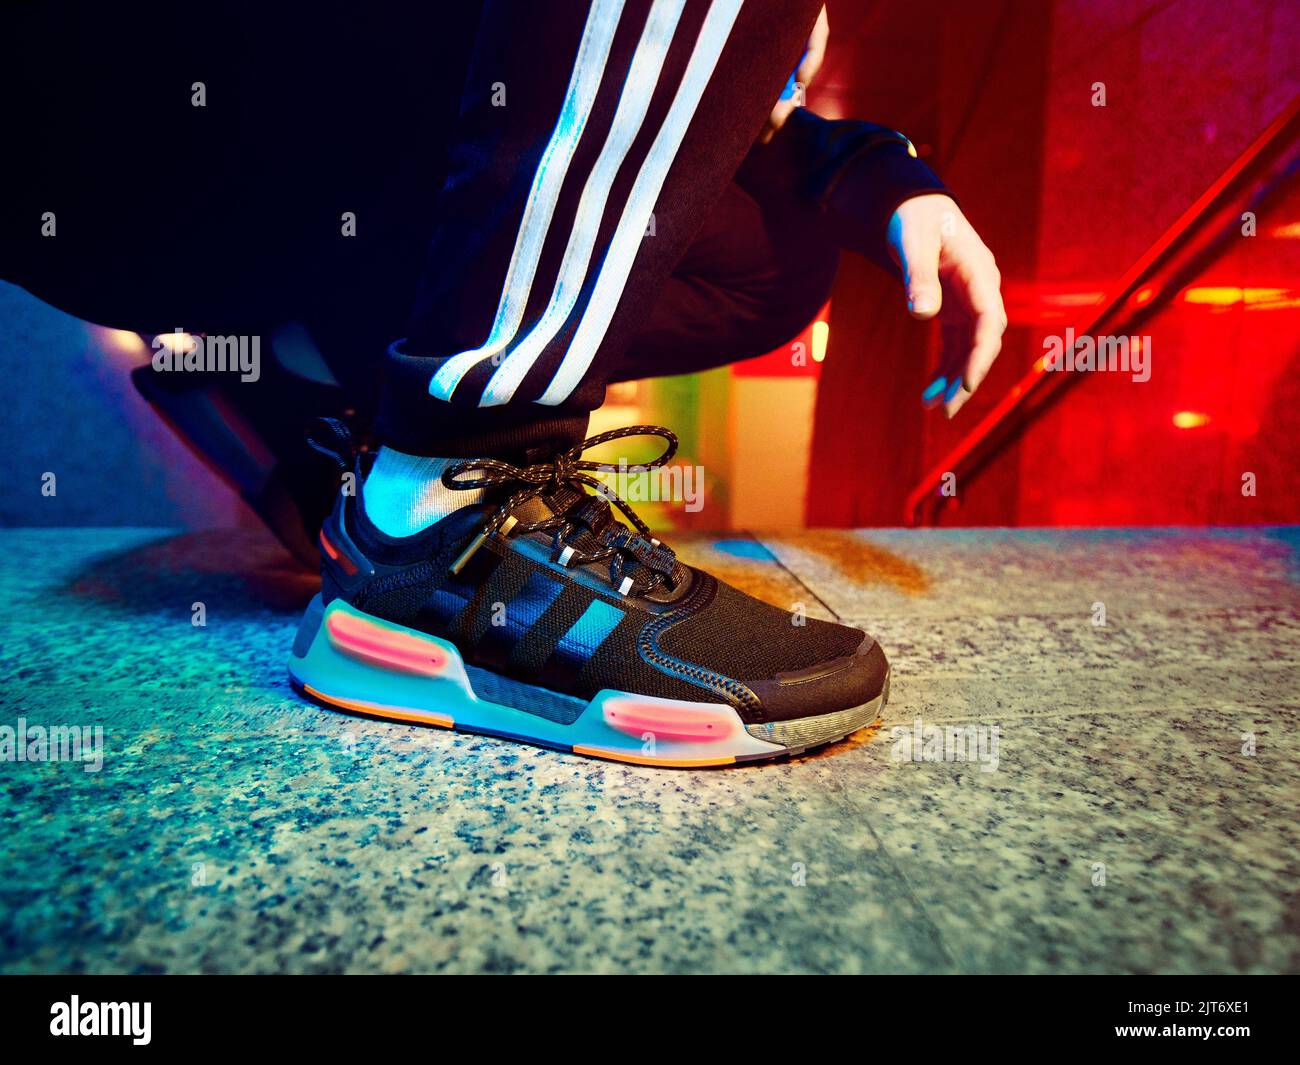 Adidas originals hi-res stock photography and images - Alamy